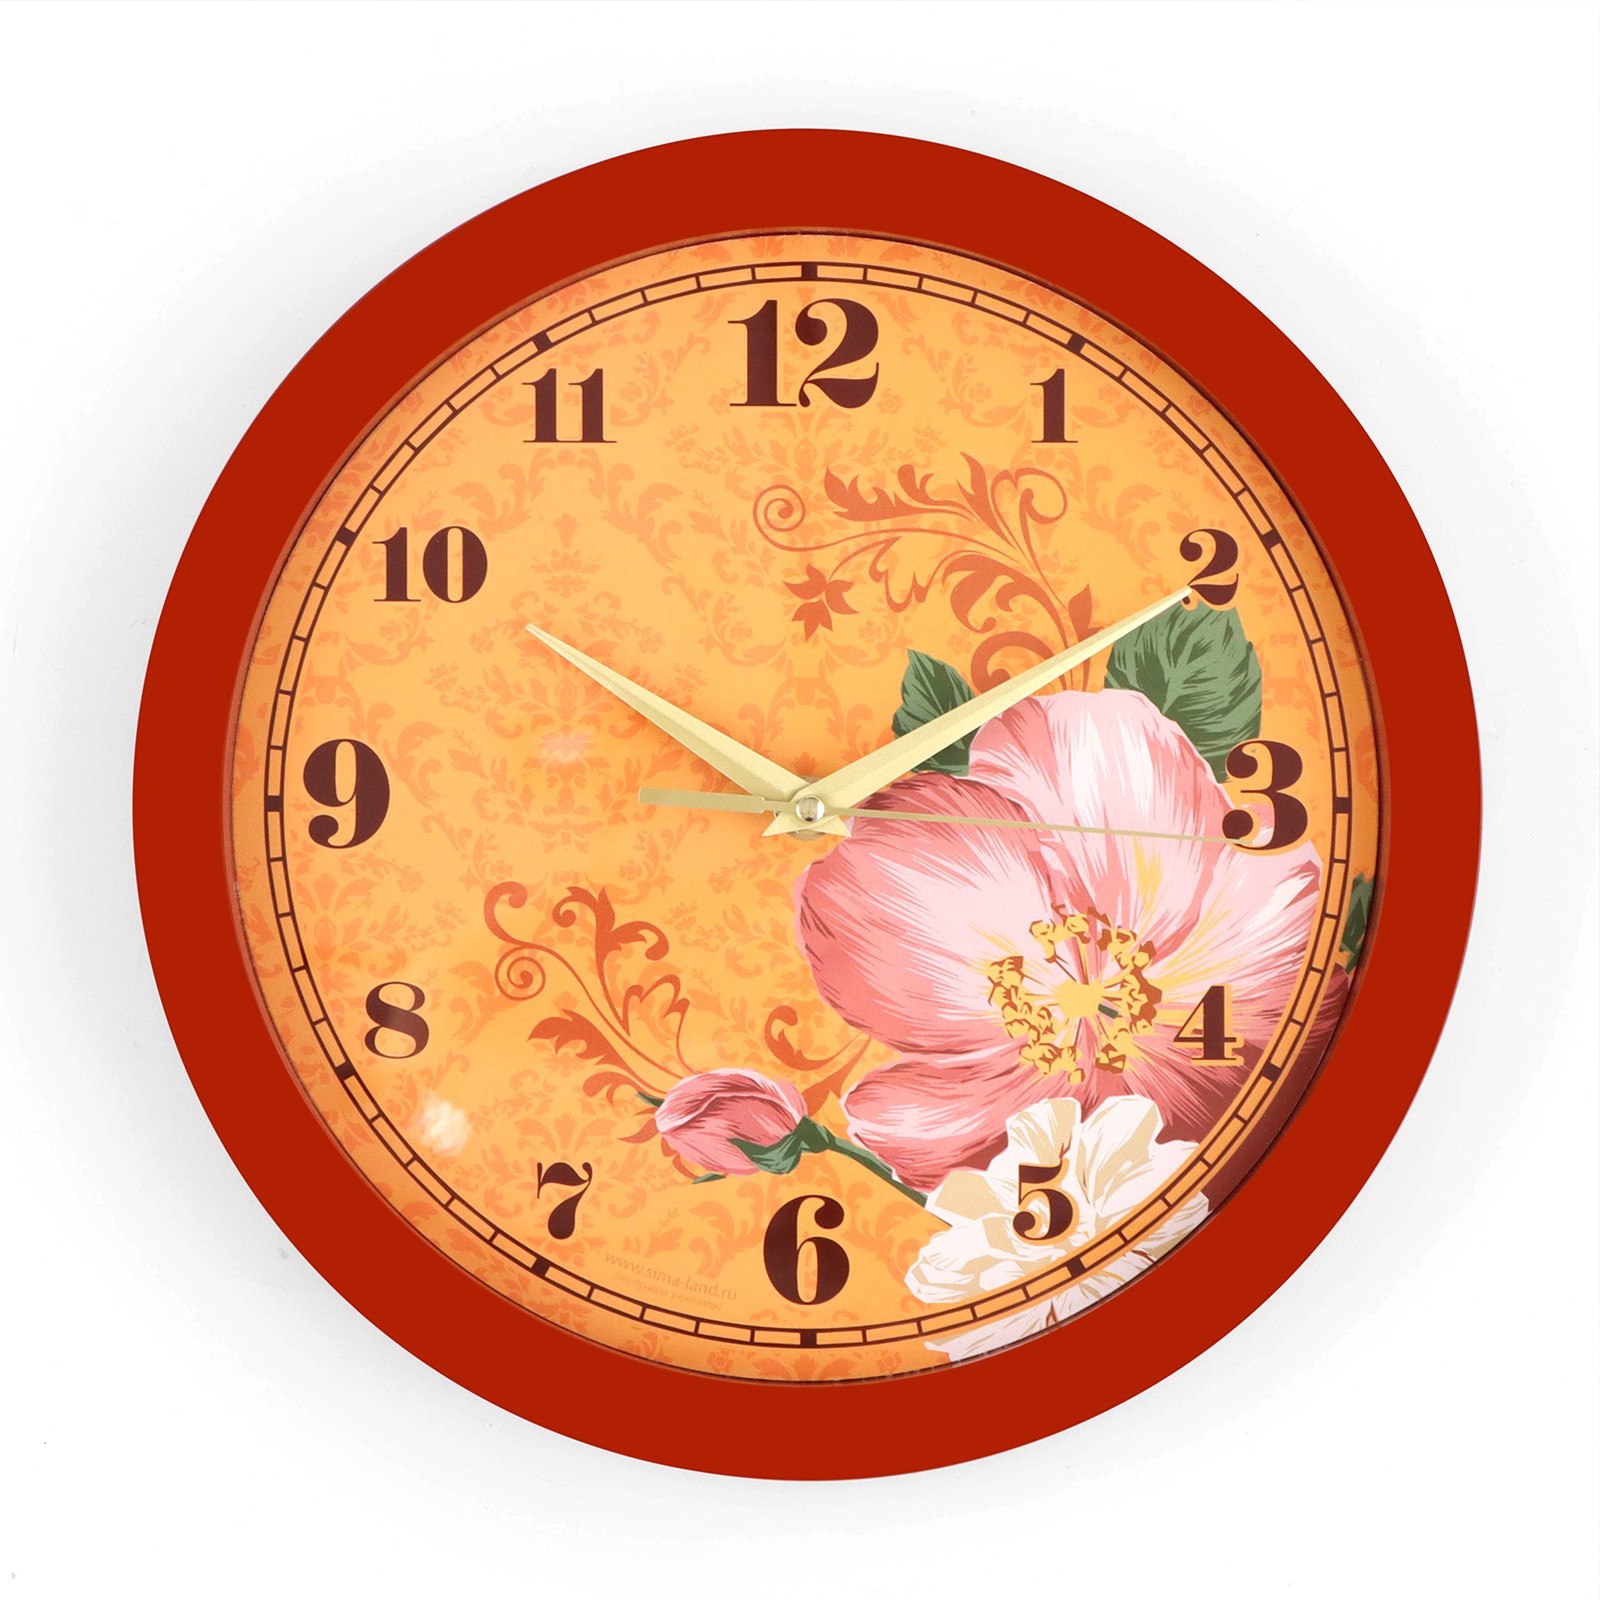 Настенные часы красноярск. Самые красивые настенные часы. Цветы (часы настенные). Часы настенные красивые для интерьера.